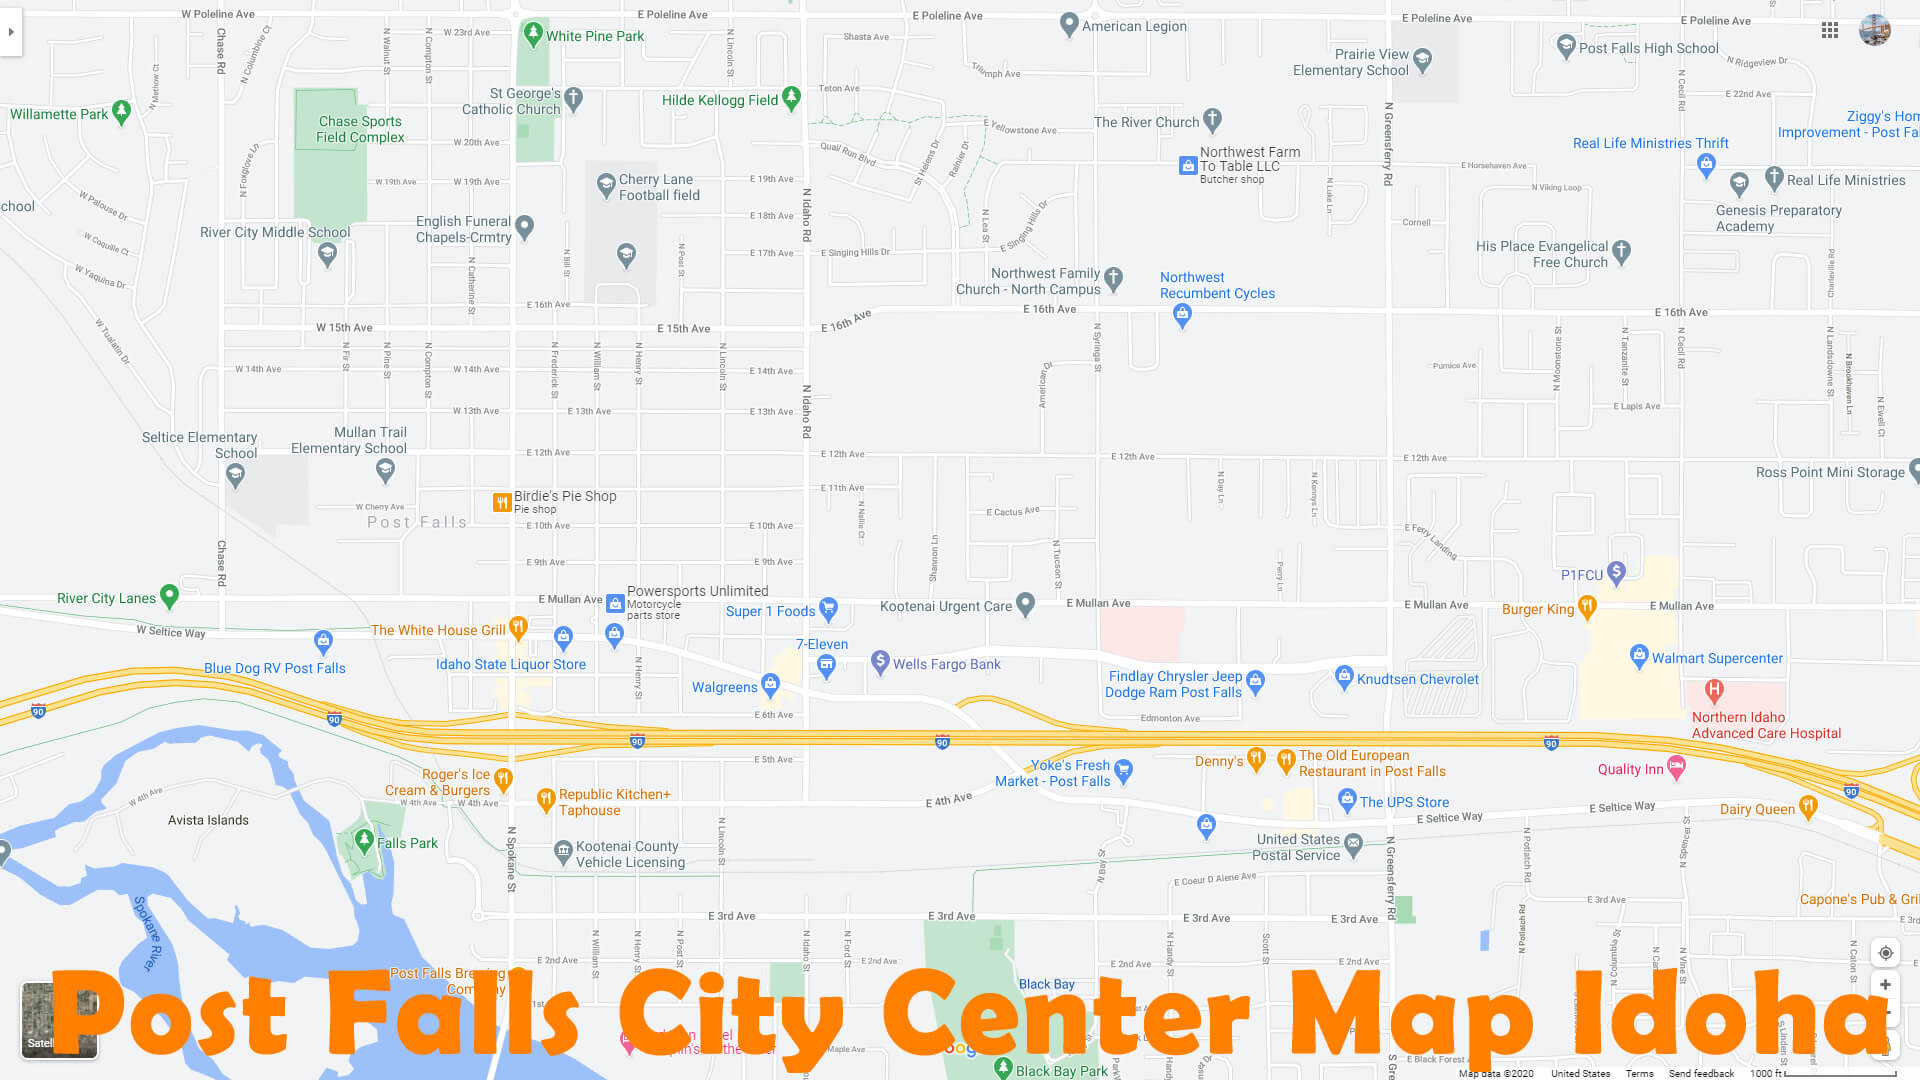 Post Falls City Center Map Idoha